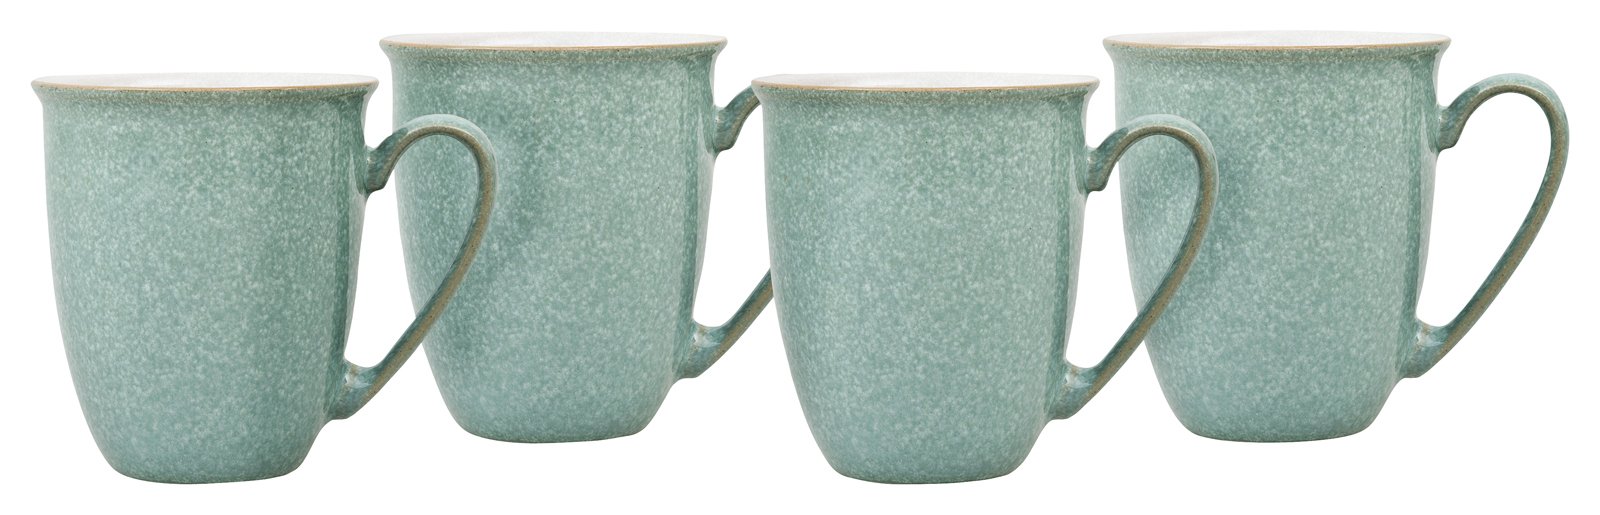 Denby Elements Set of 4 Ceramic Coffee Mugs - Green